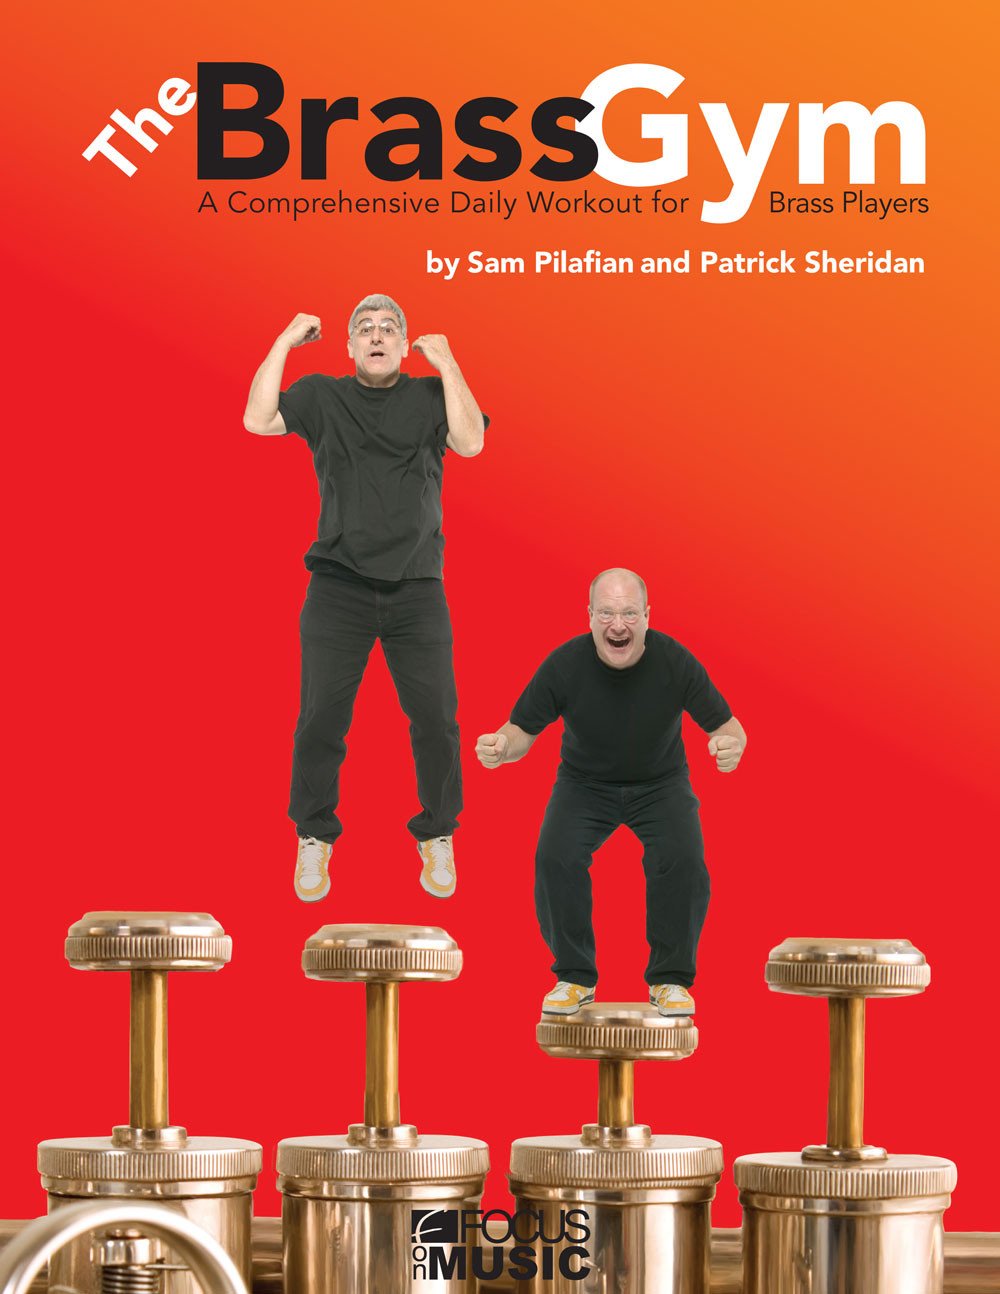 The Brass Gym